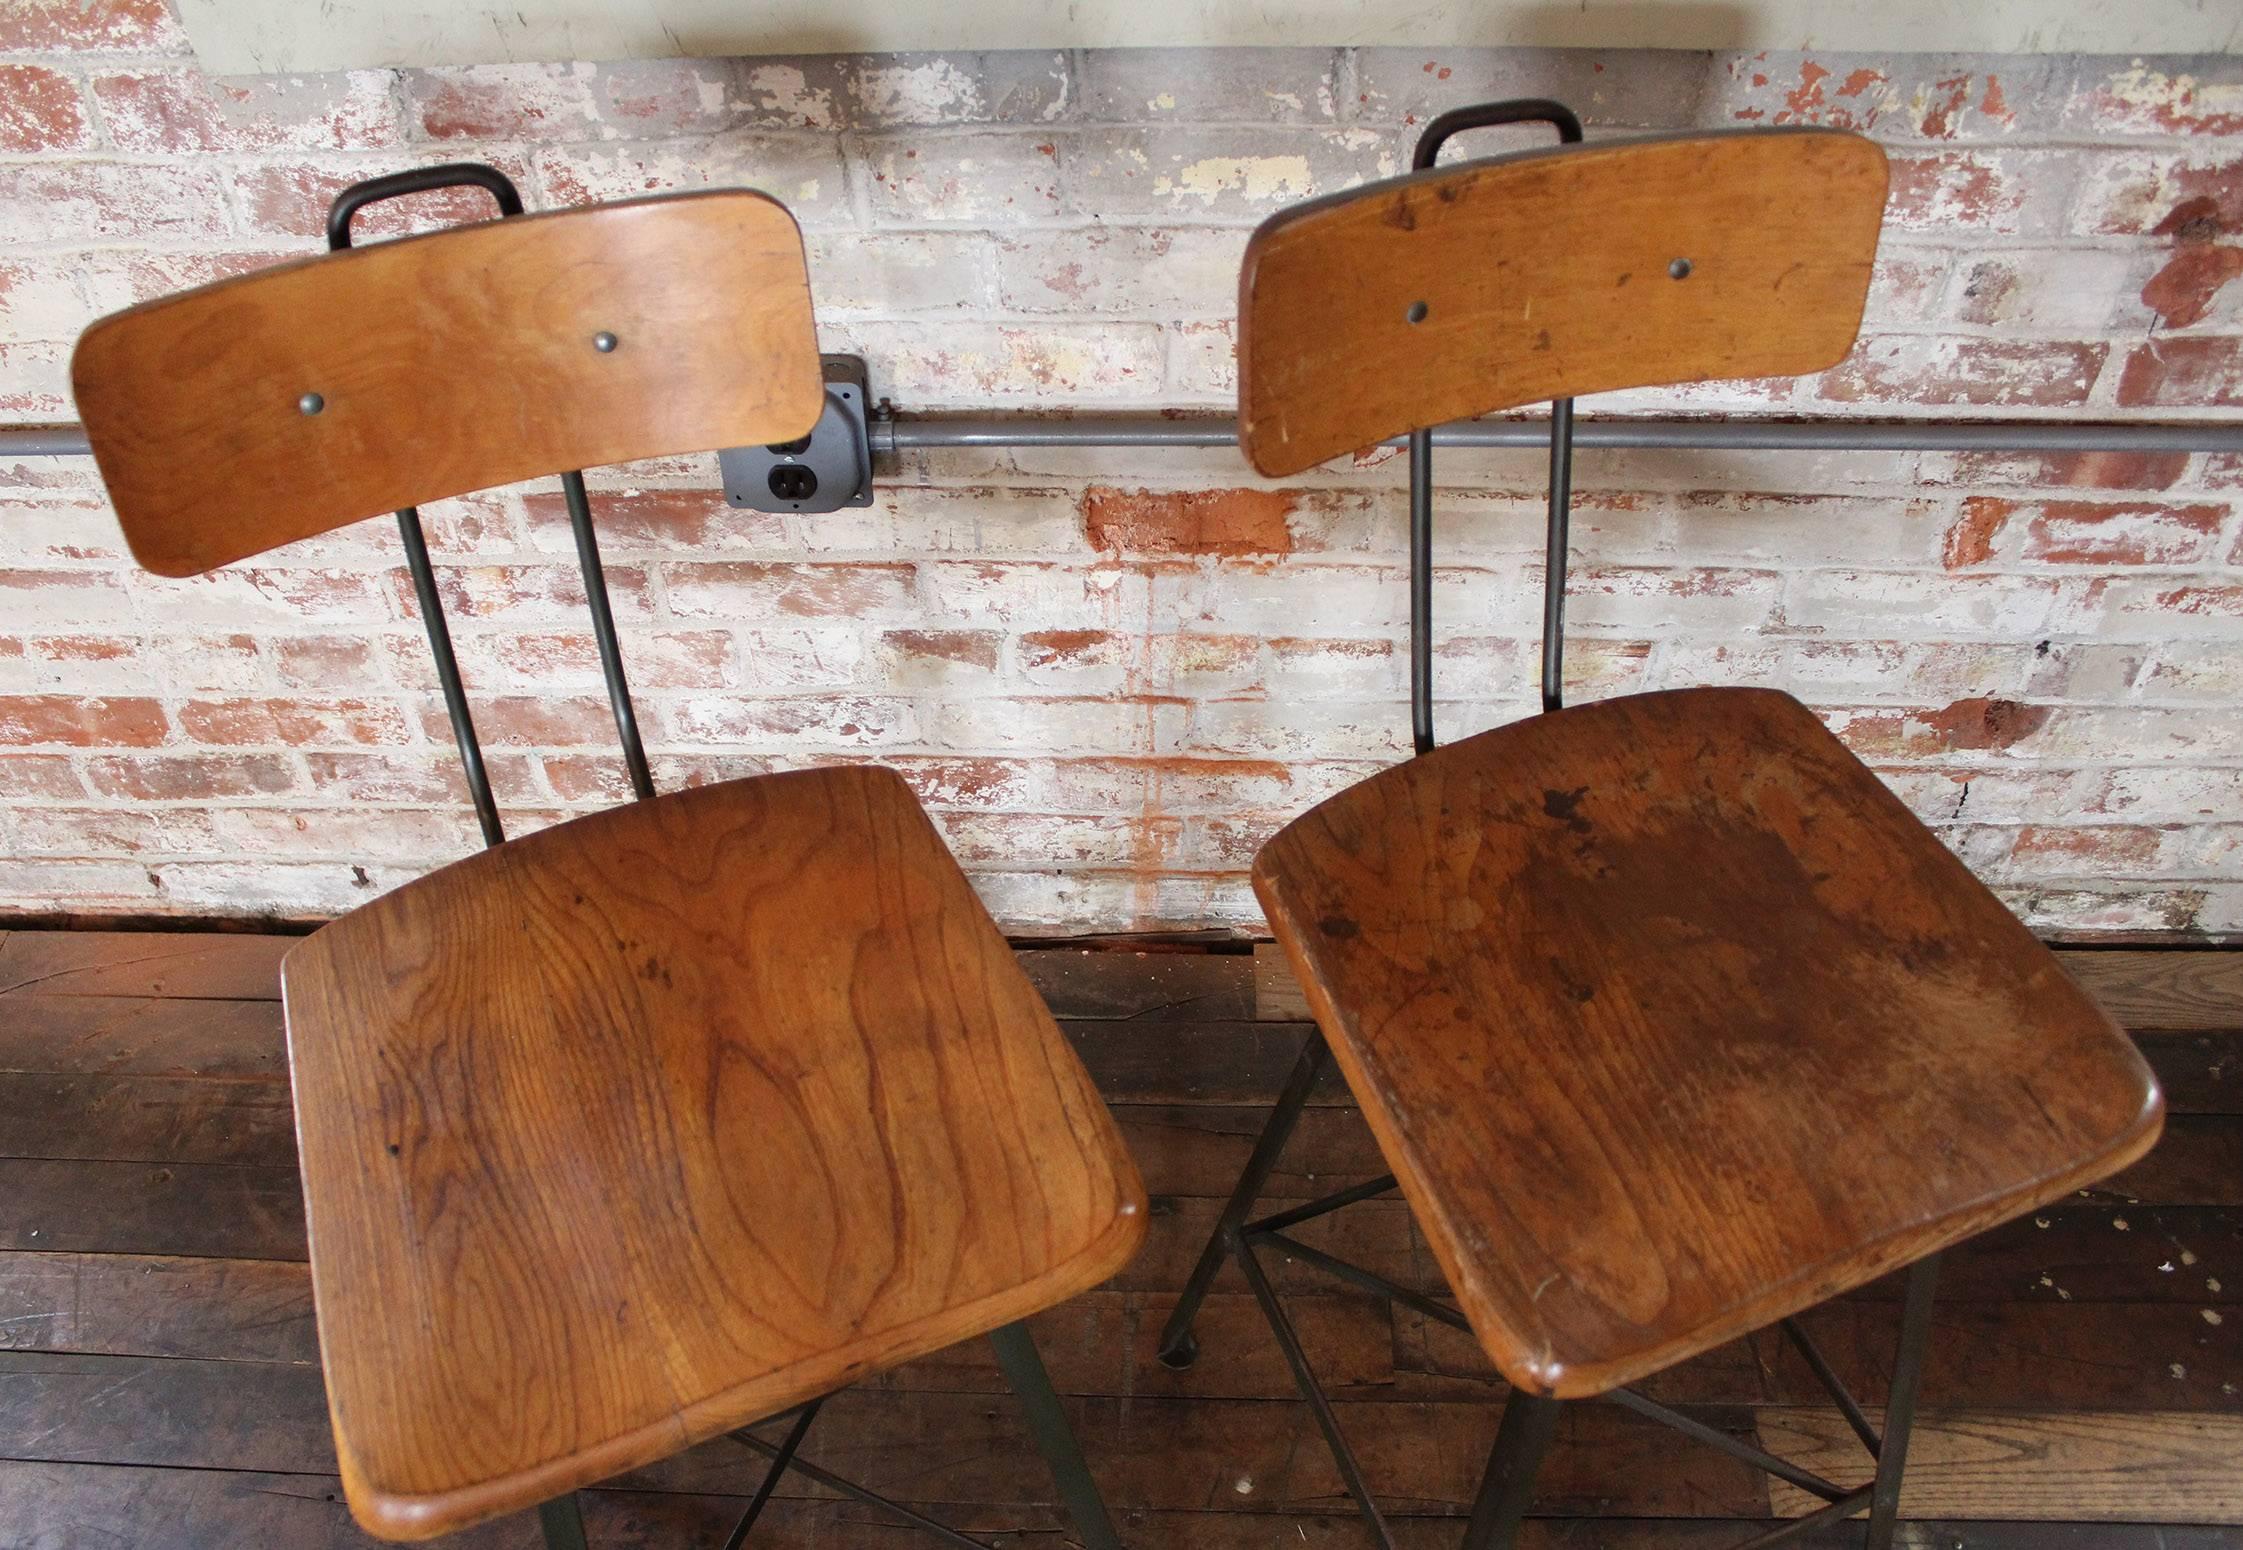 wood and metal bar stools with backs